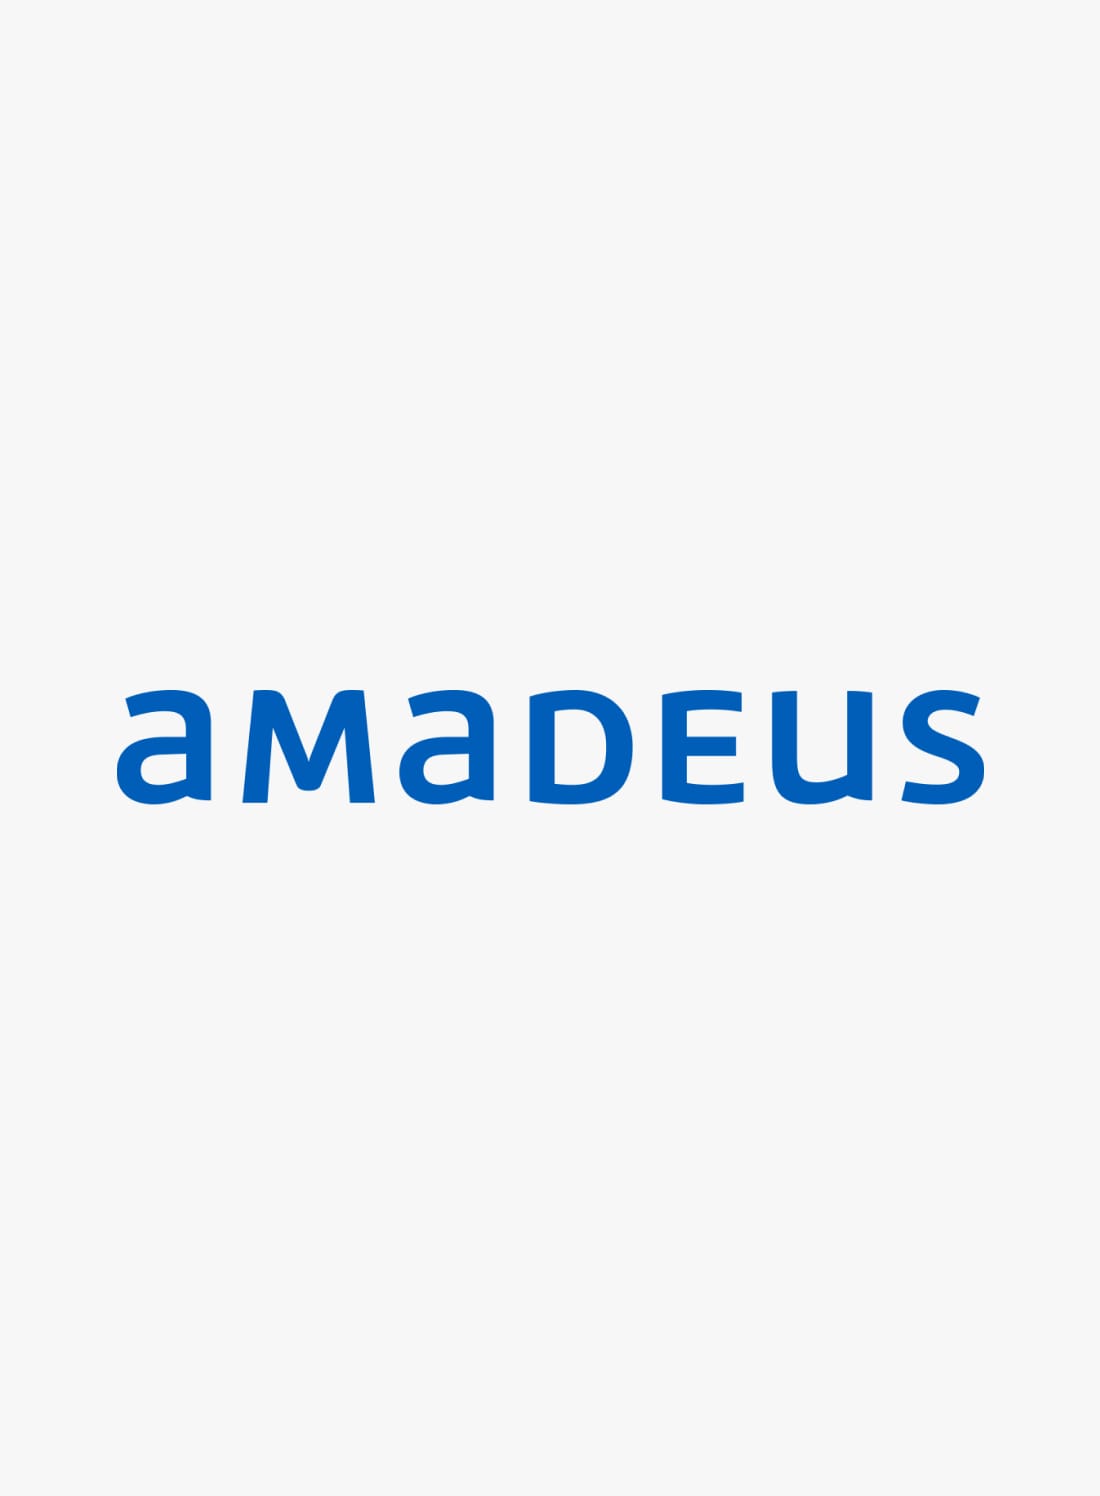 Amadeus Kazakhstan